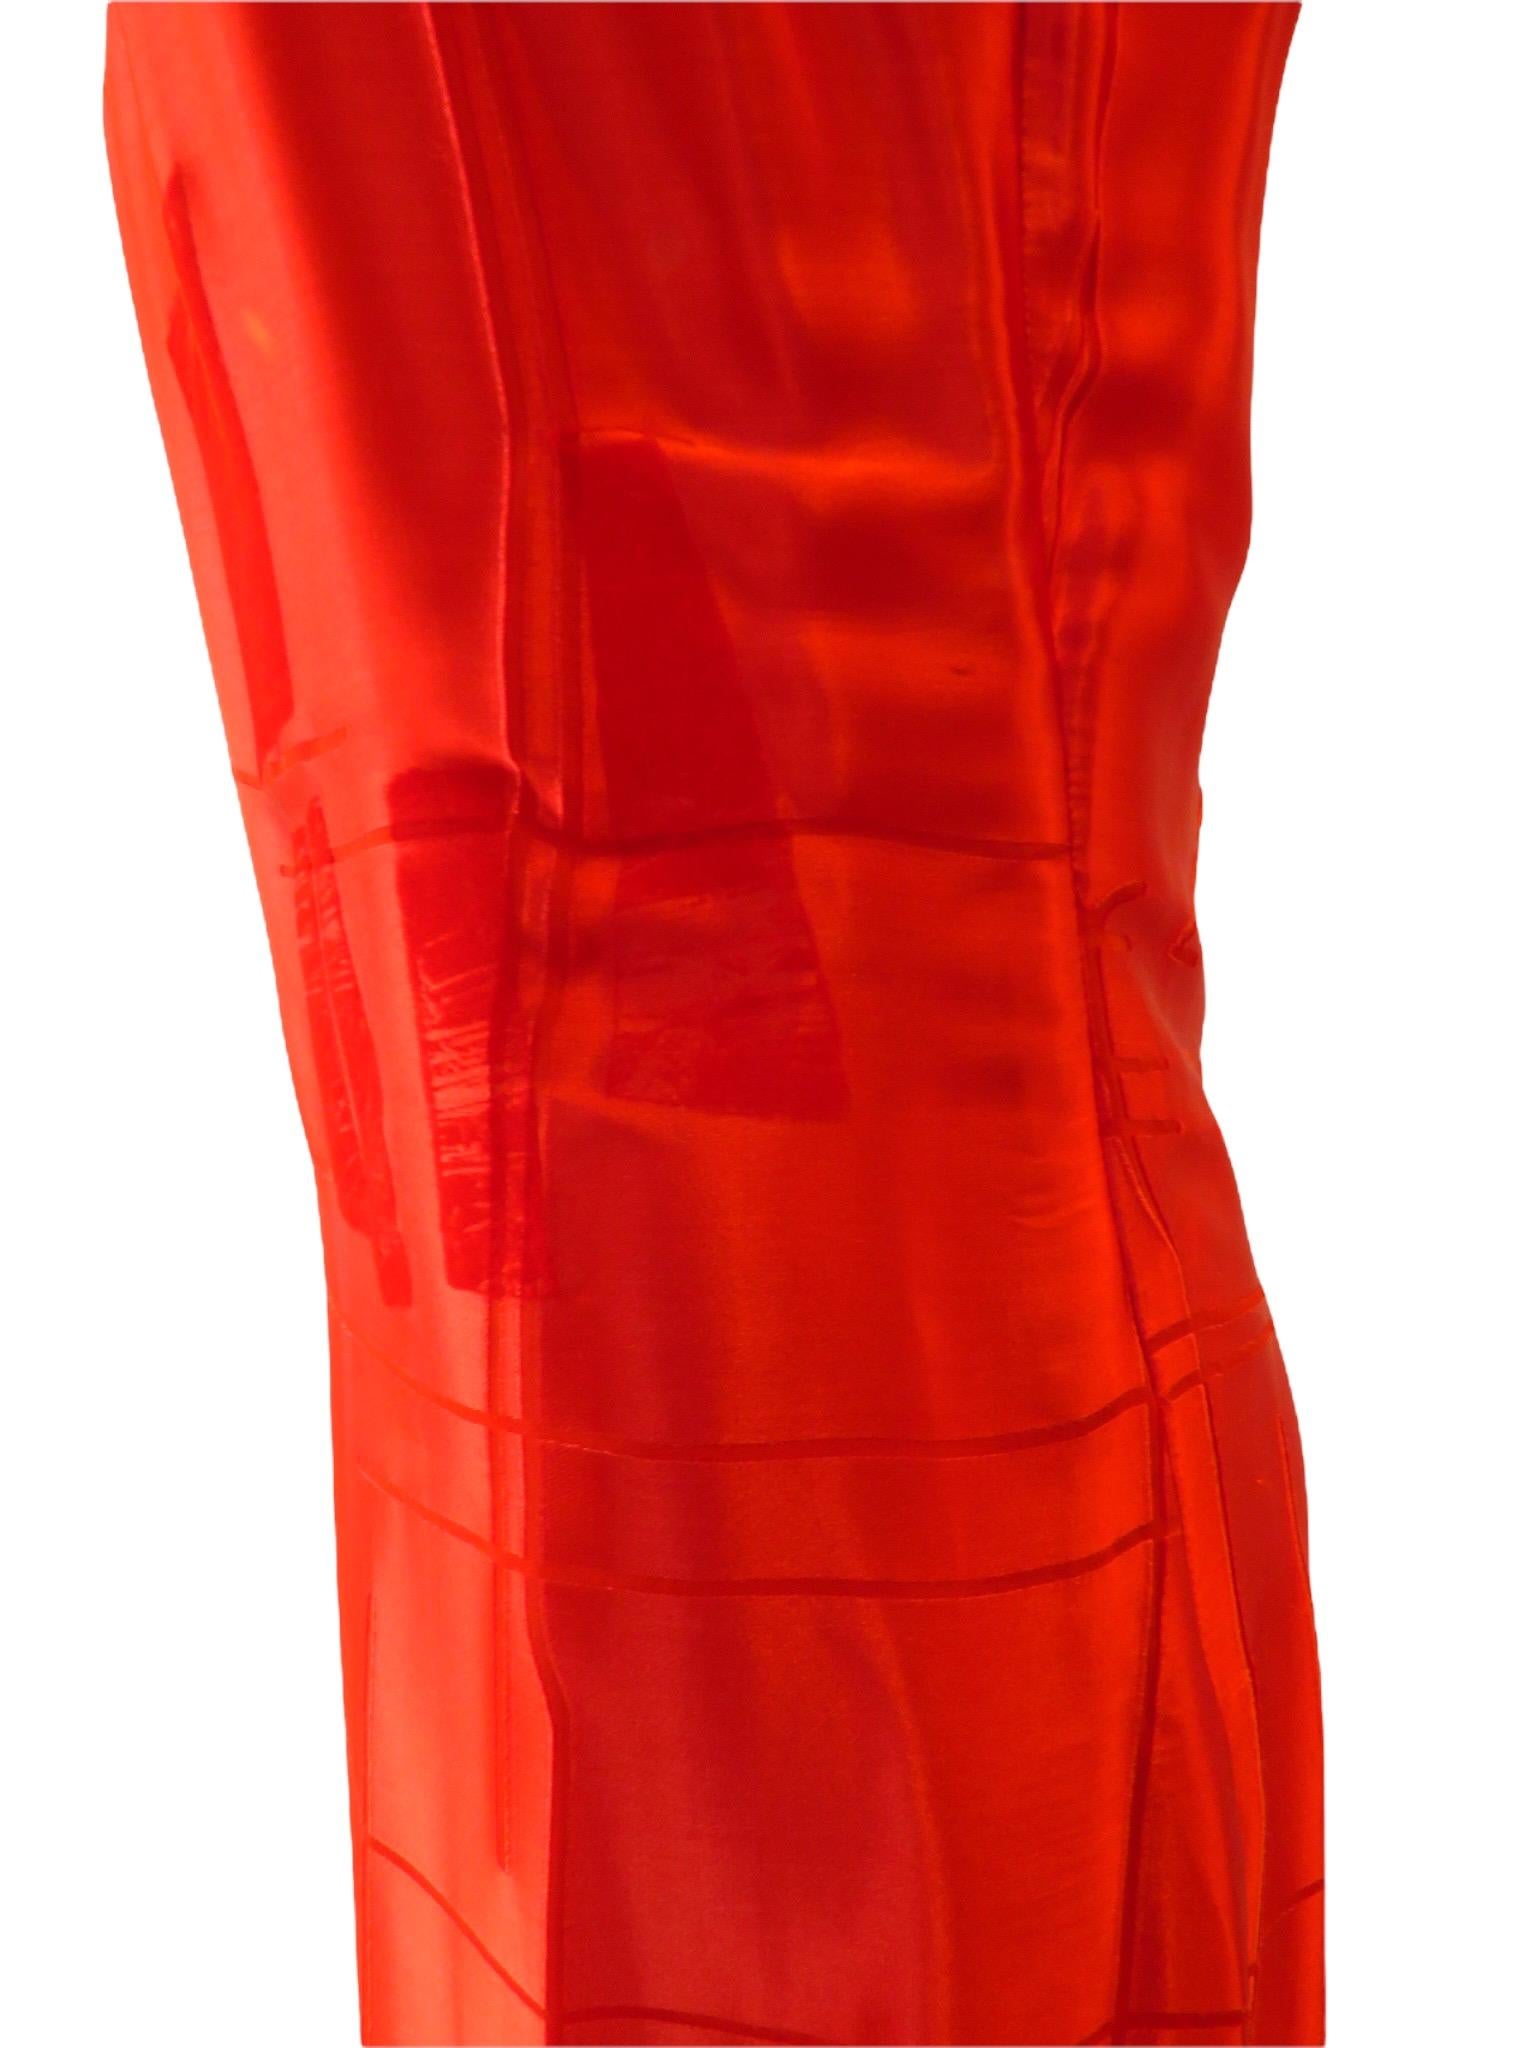 Martine Sitbon Red Silk and Velvet Dress For Sale 5